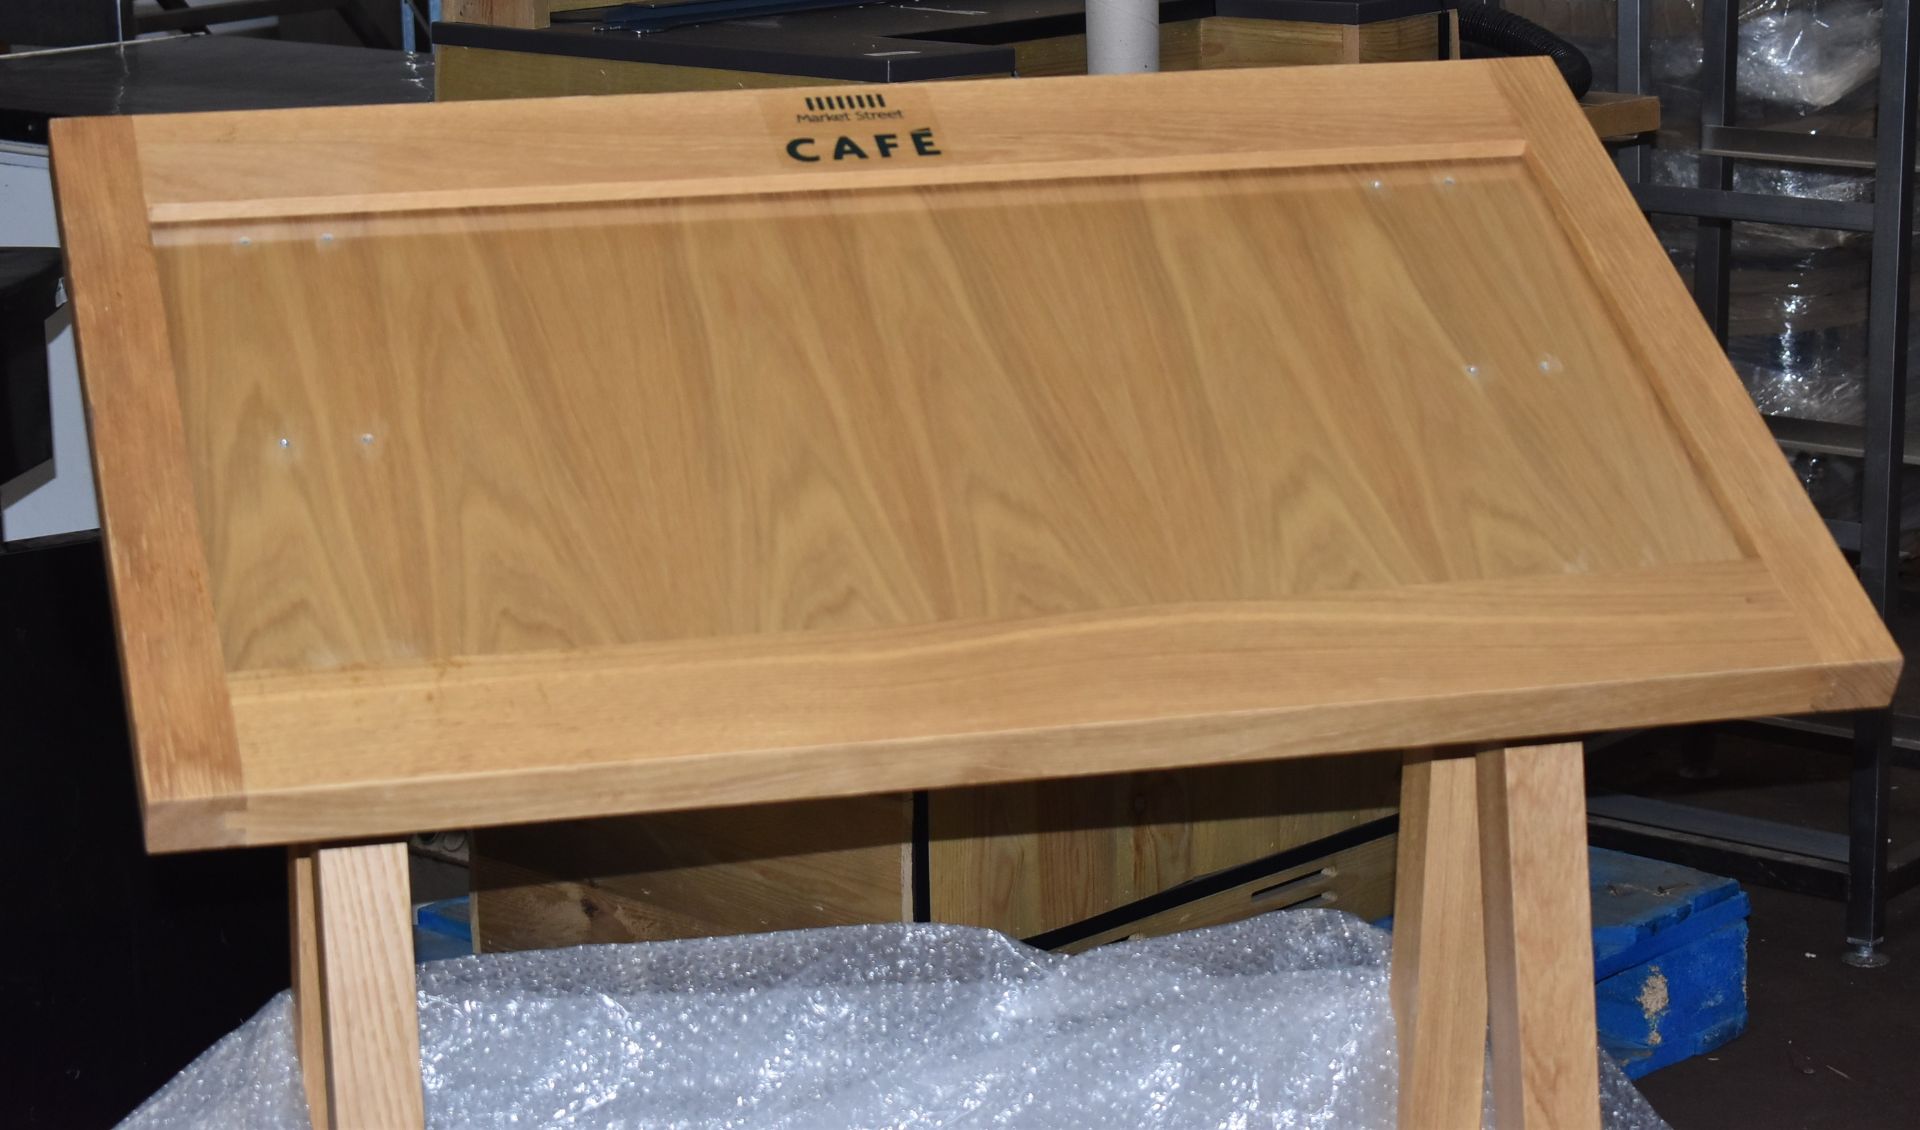 1 x Solid Oak Lecturn Menu Board - Freestanding - Unused Item From Major Supermarket Chain - Menu